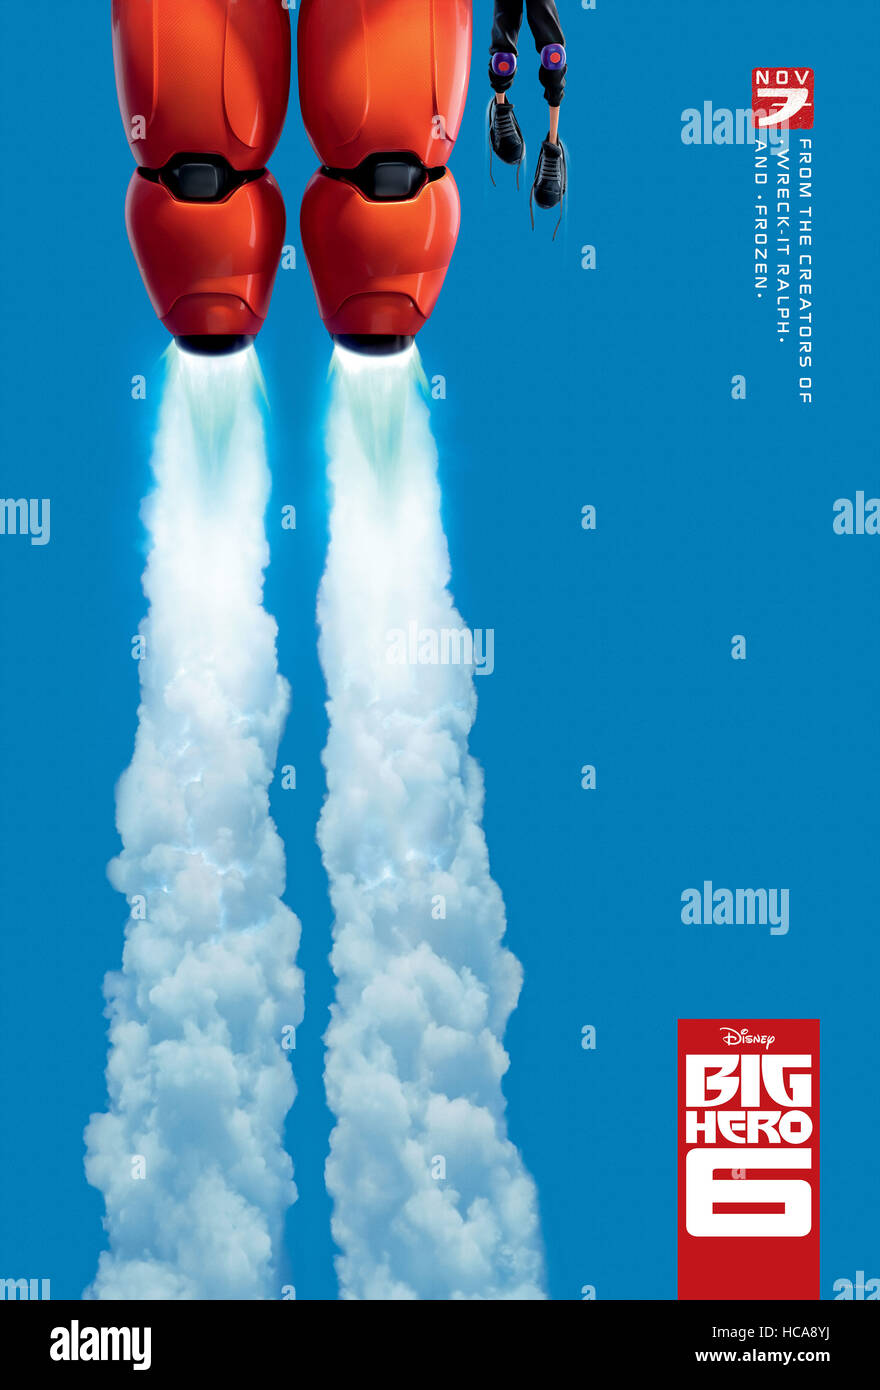 BIG HERO 6, advance US poster art, 2014. ©Walt Disney Studios Motion Pictures/courtesy Everett Collection Stock Photo